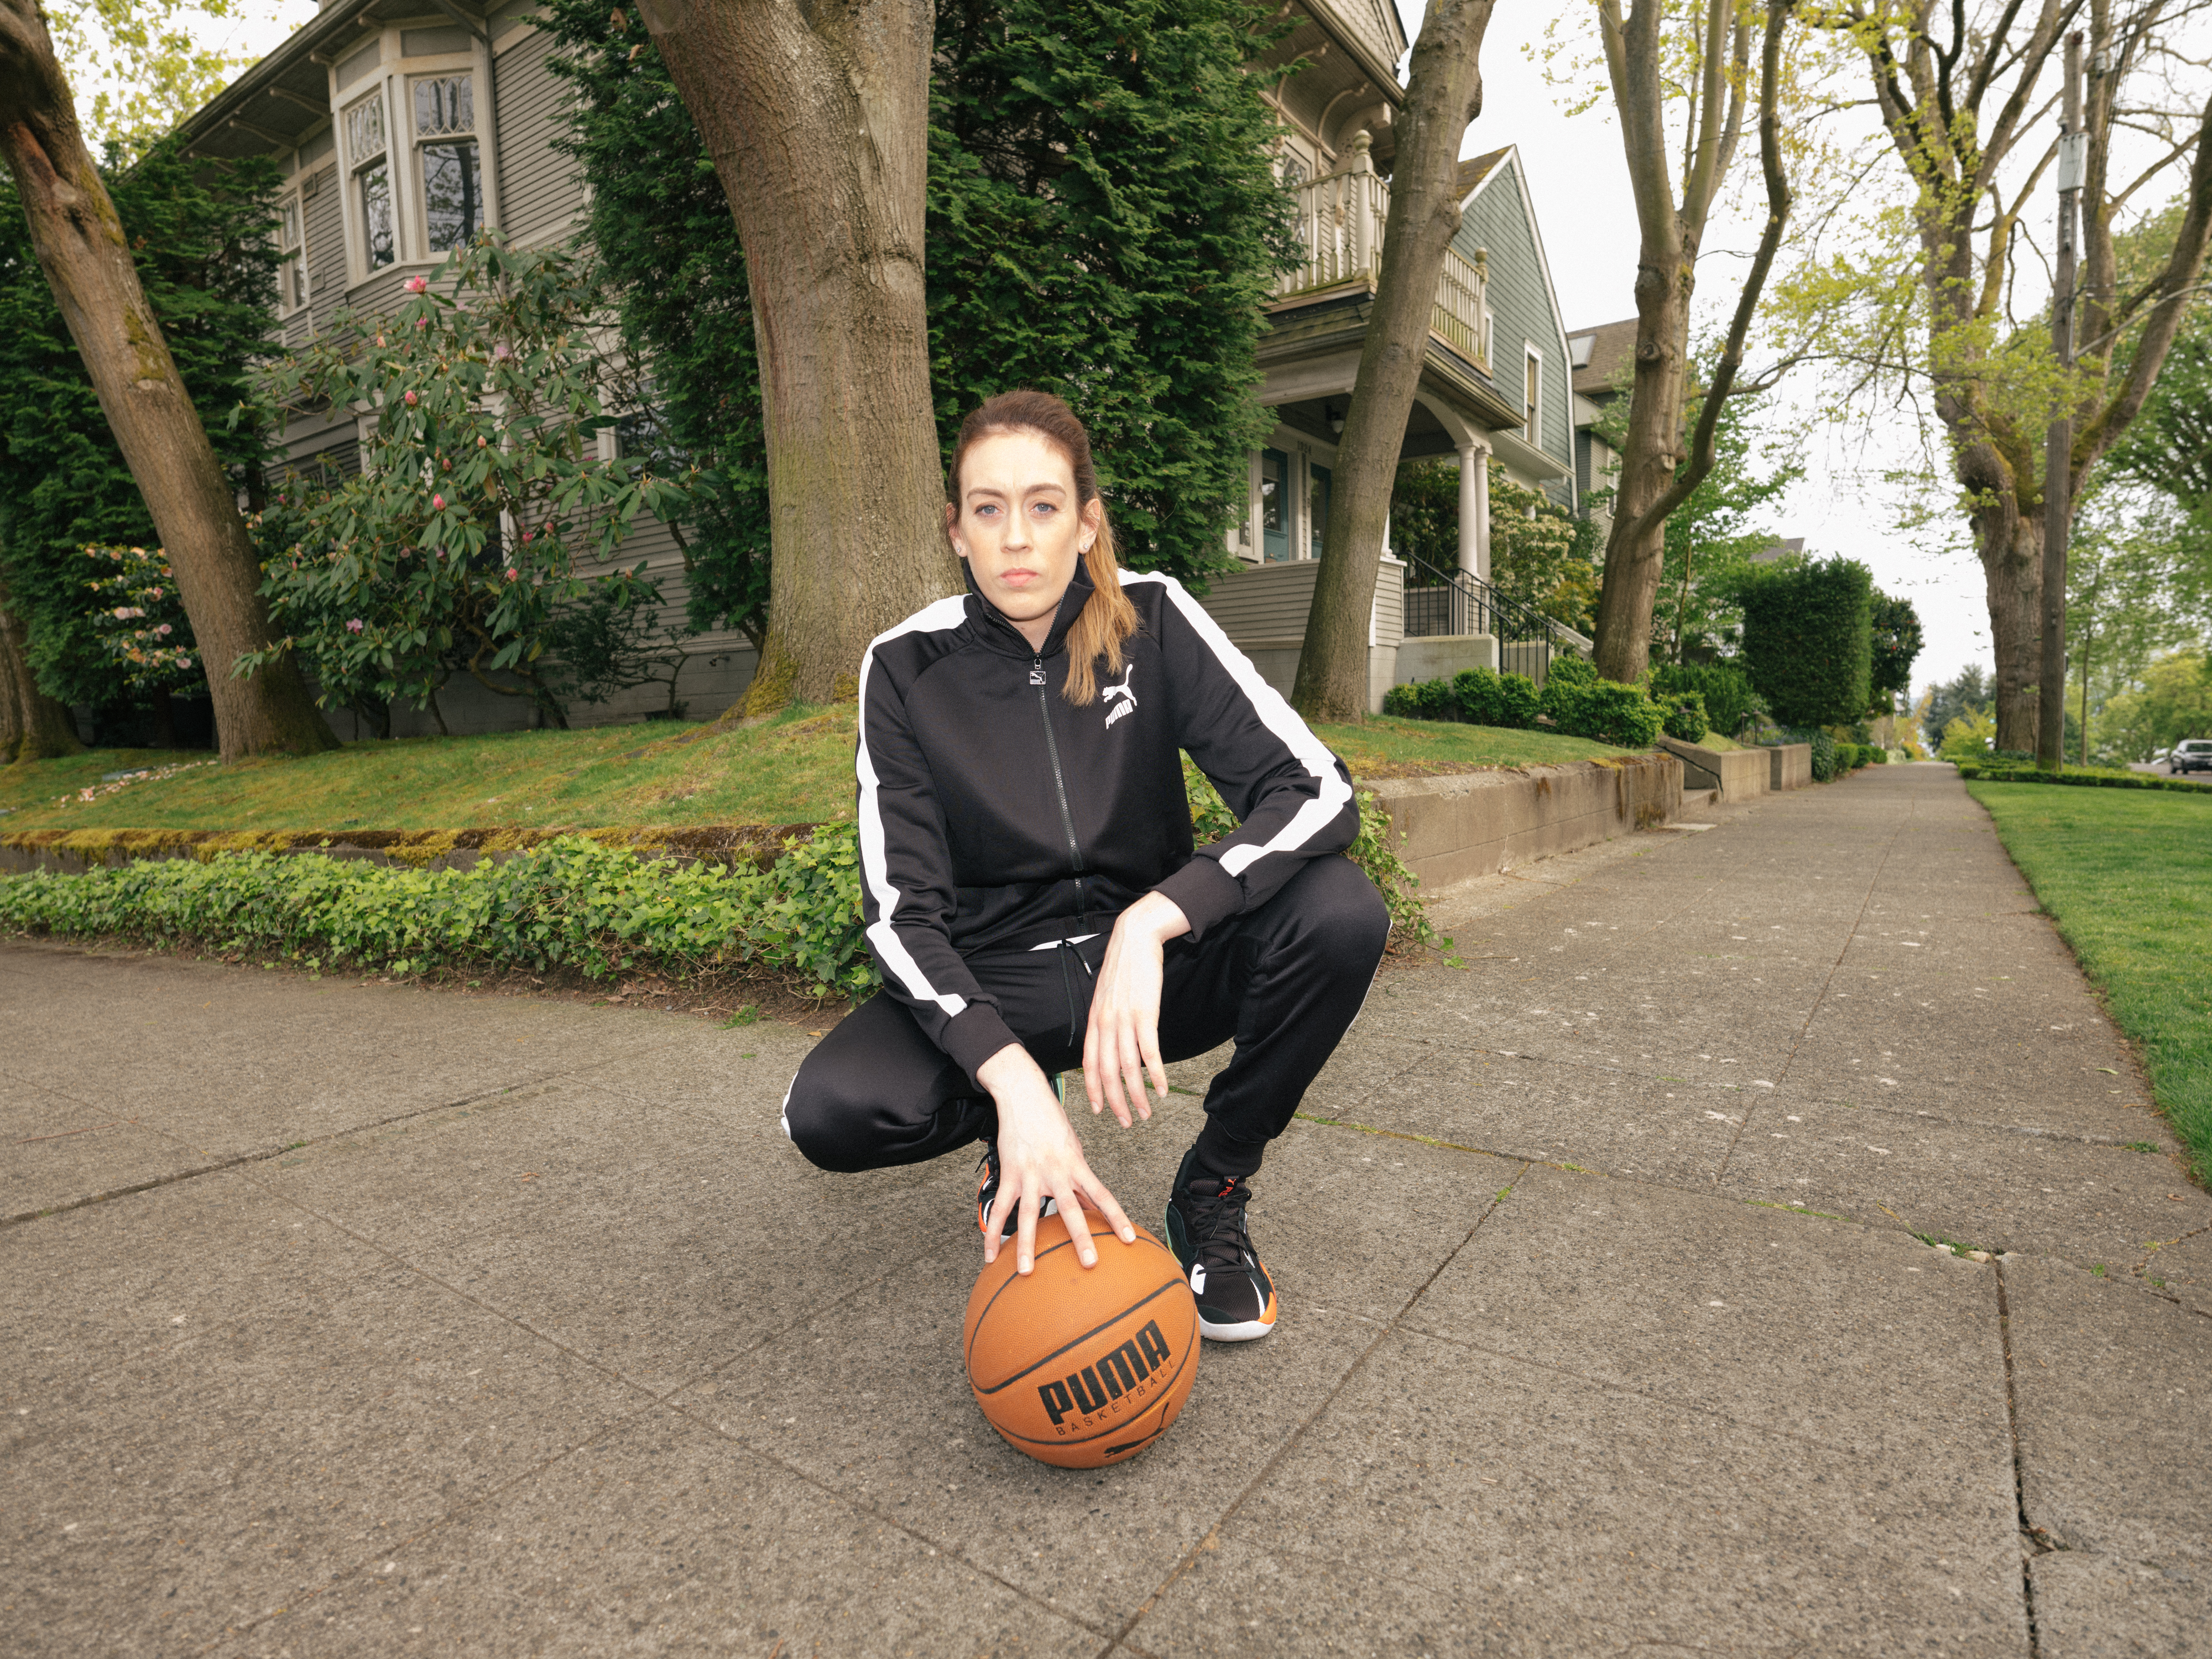 PUMA Announces Partnership With WNBA Champion Breanna Stewart